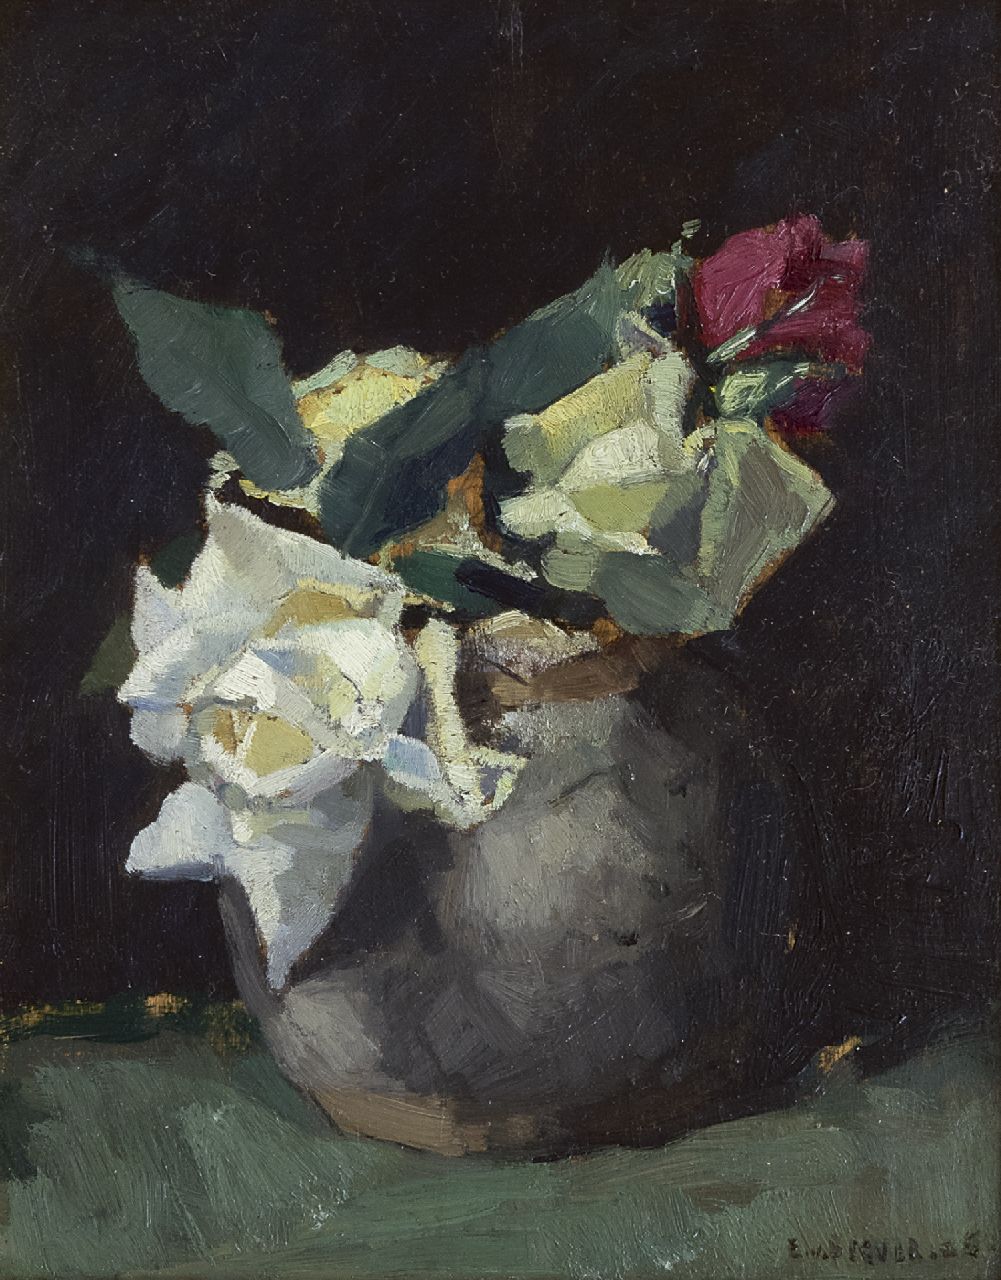 Beever E.S. van | 'Emanuël' Samson van Beever, Roses, oil on panel 24.0 x 18.7 cm, signed l.r.